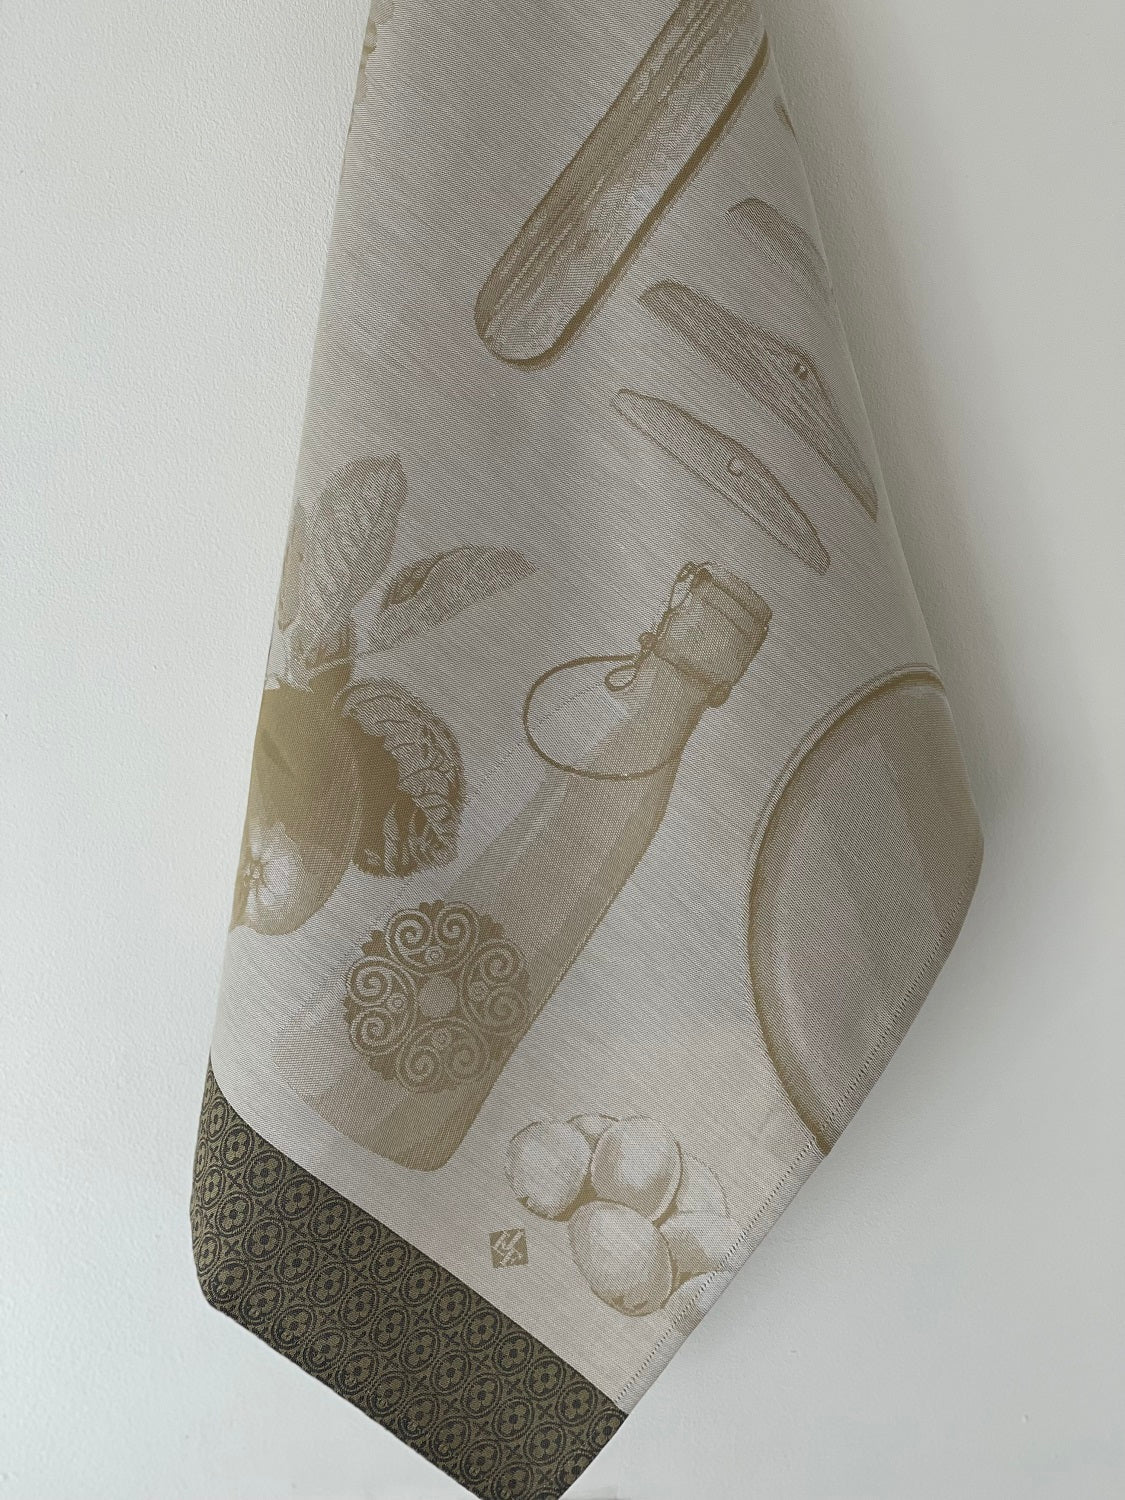 Jacquard Francais "Crepes" (Ecru), Woven cotton tea towel. Made in France.